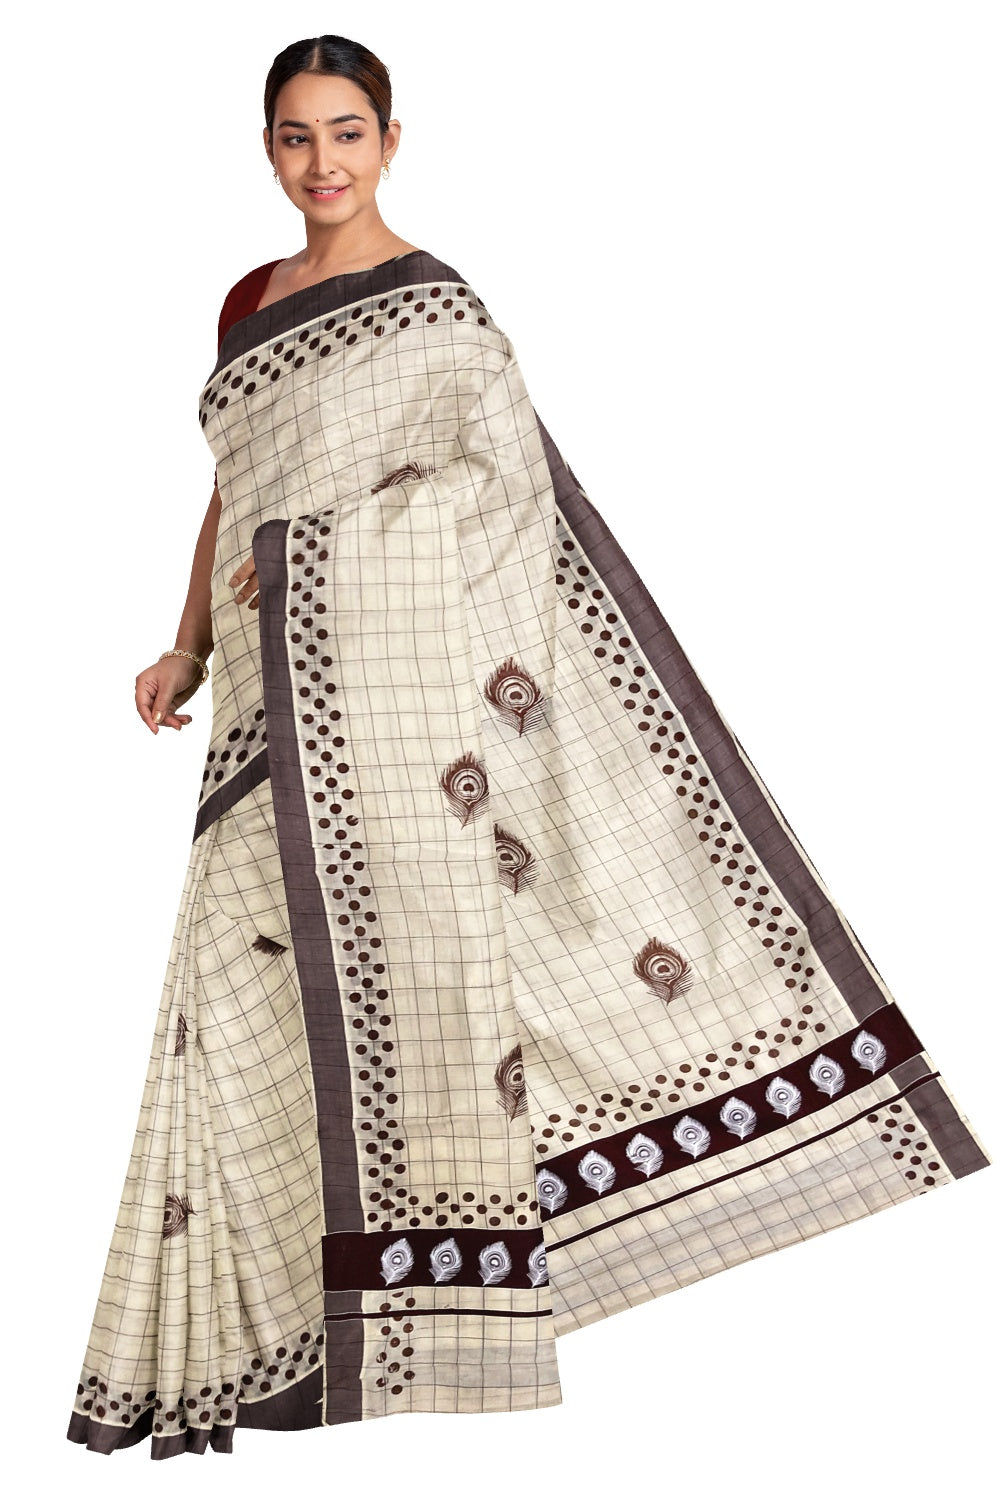 Pure Cotton Check Design Kerala Saree with Dark Brown Polka Dots and Feather Block Prints